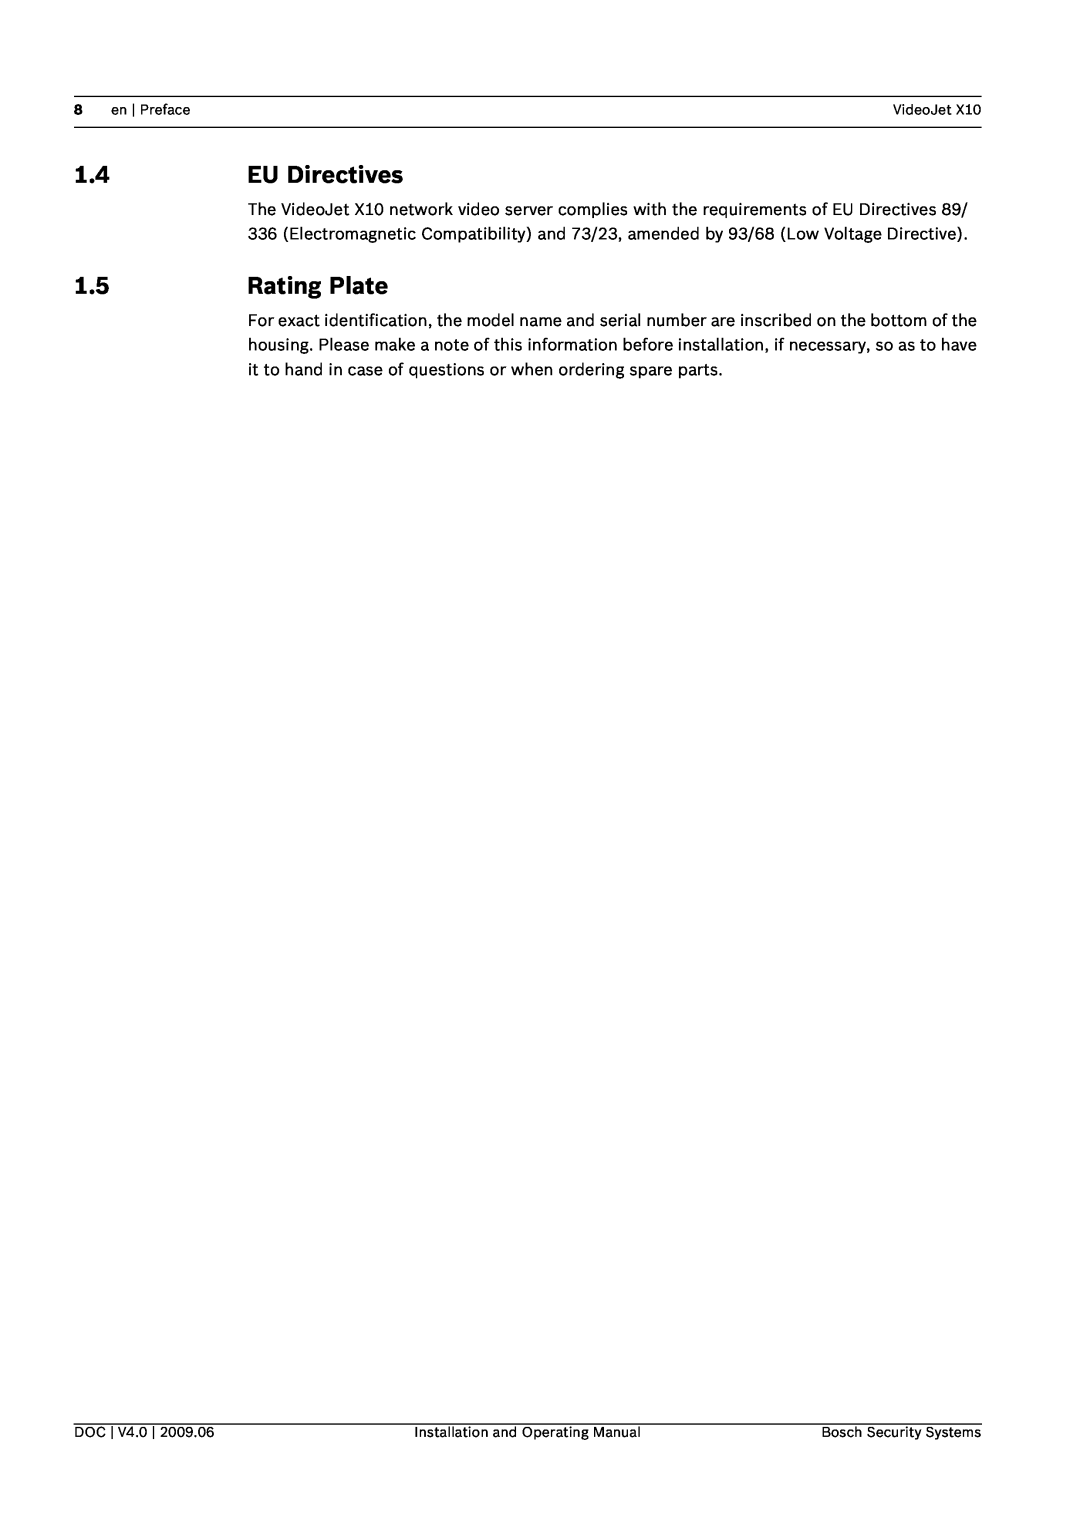 Bosch Appliances X10 manual EU Directives, Rating Plate 